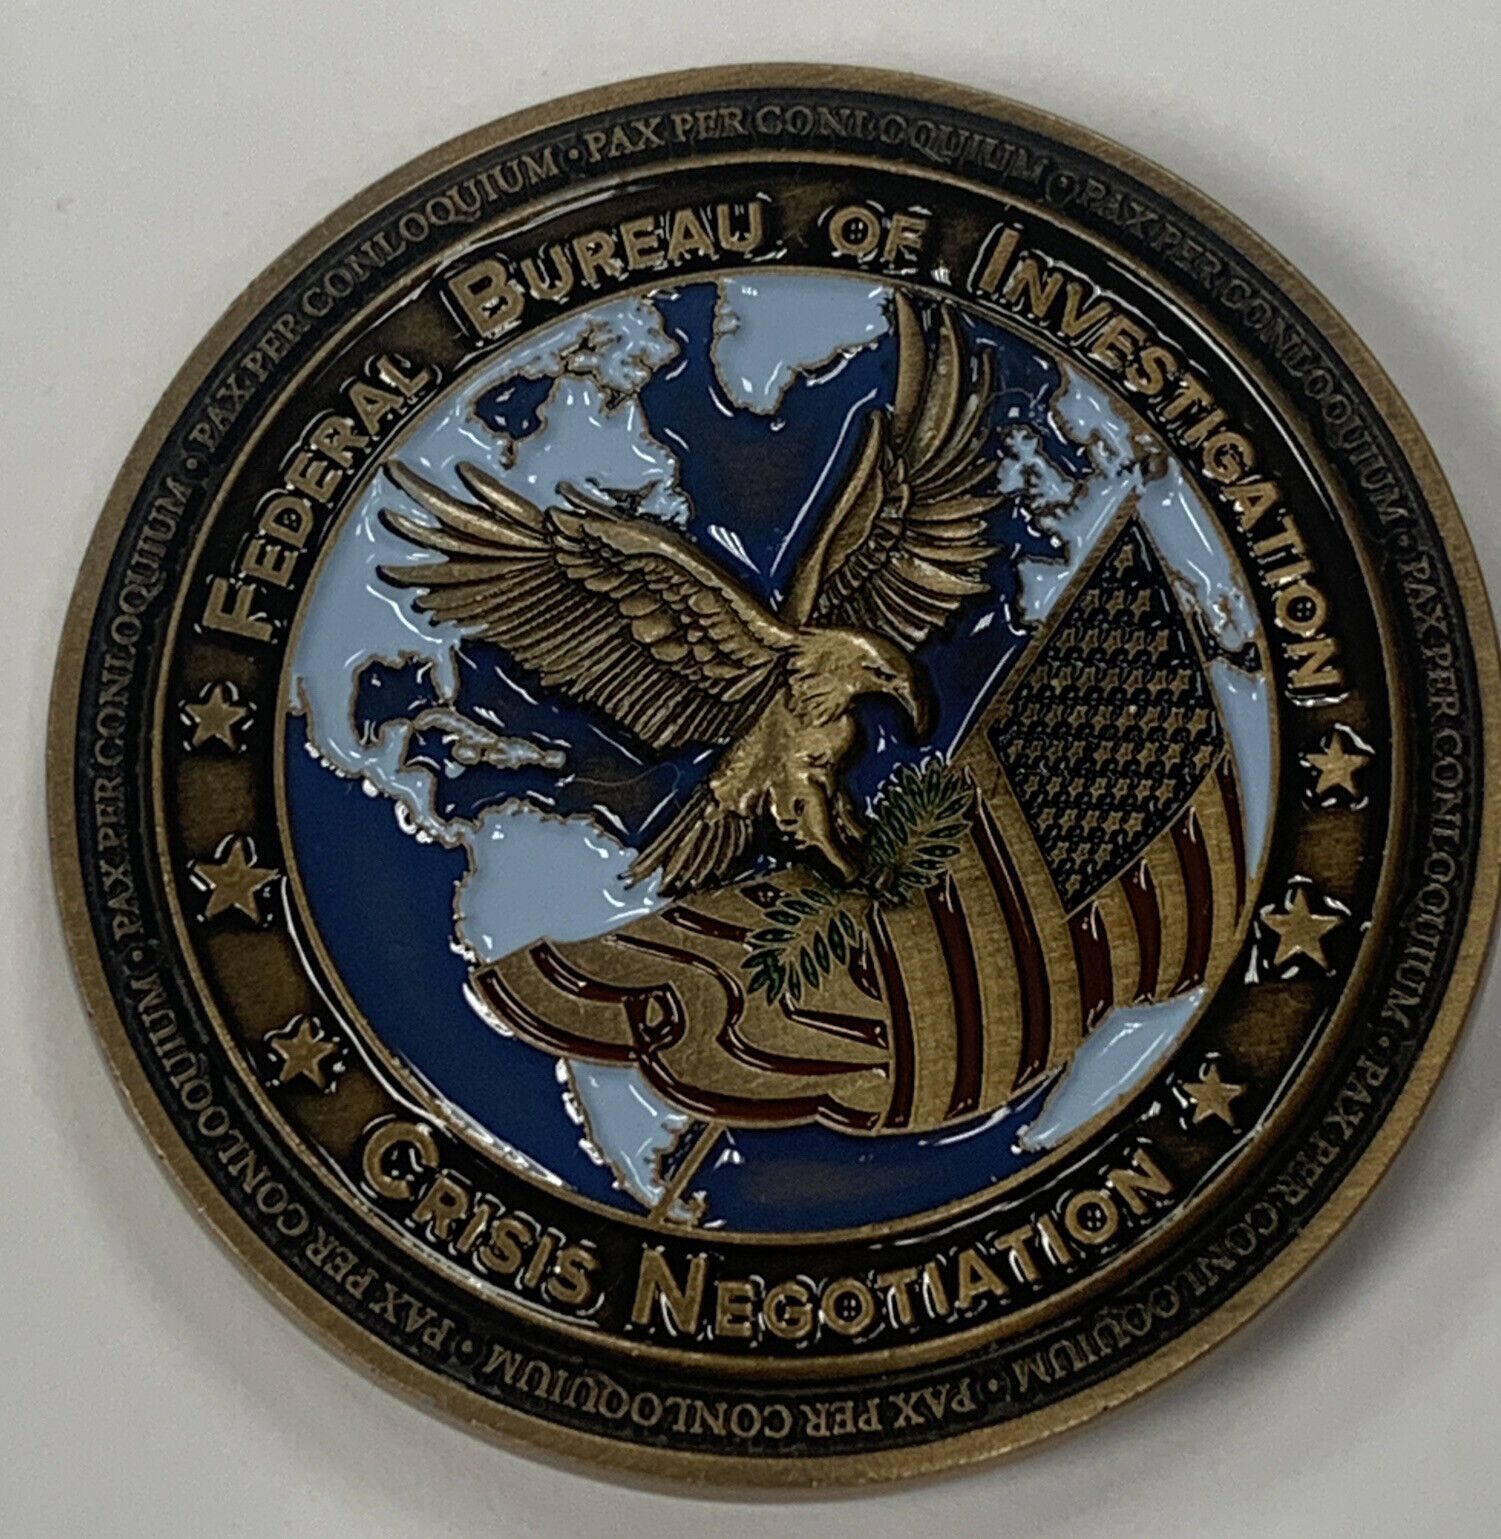 FBI Philadelphia Division Crisis Negotiation Negotiator Challenge Coin Bronze